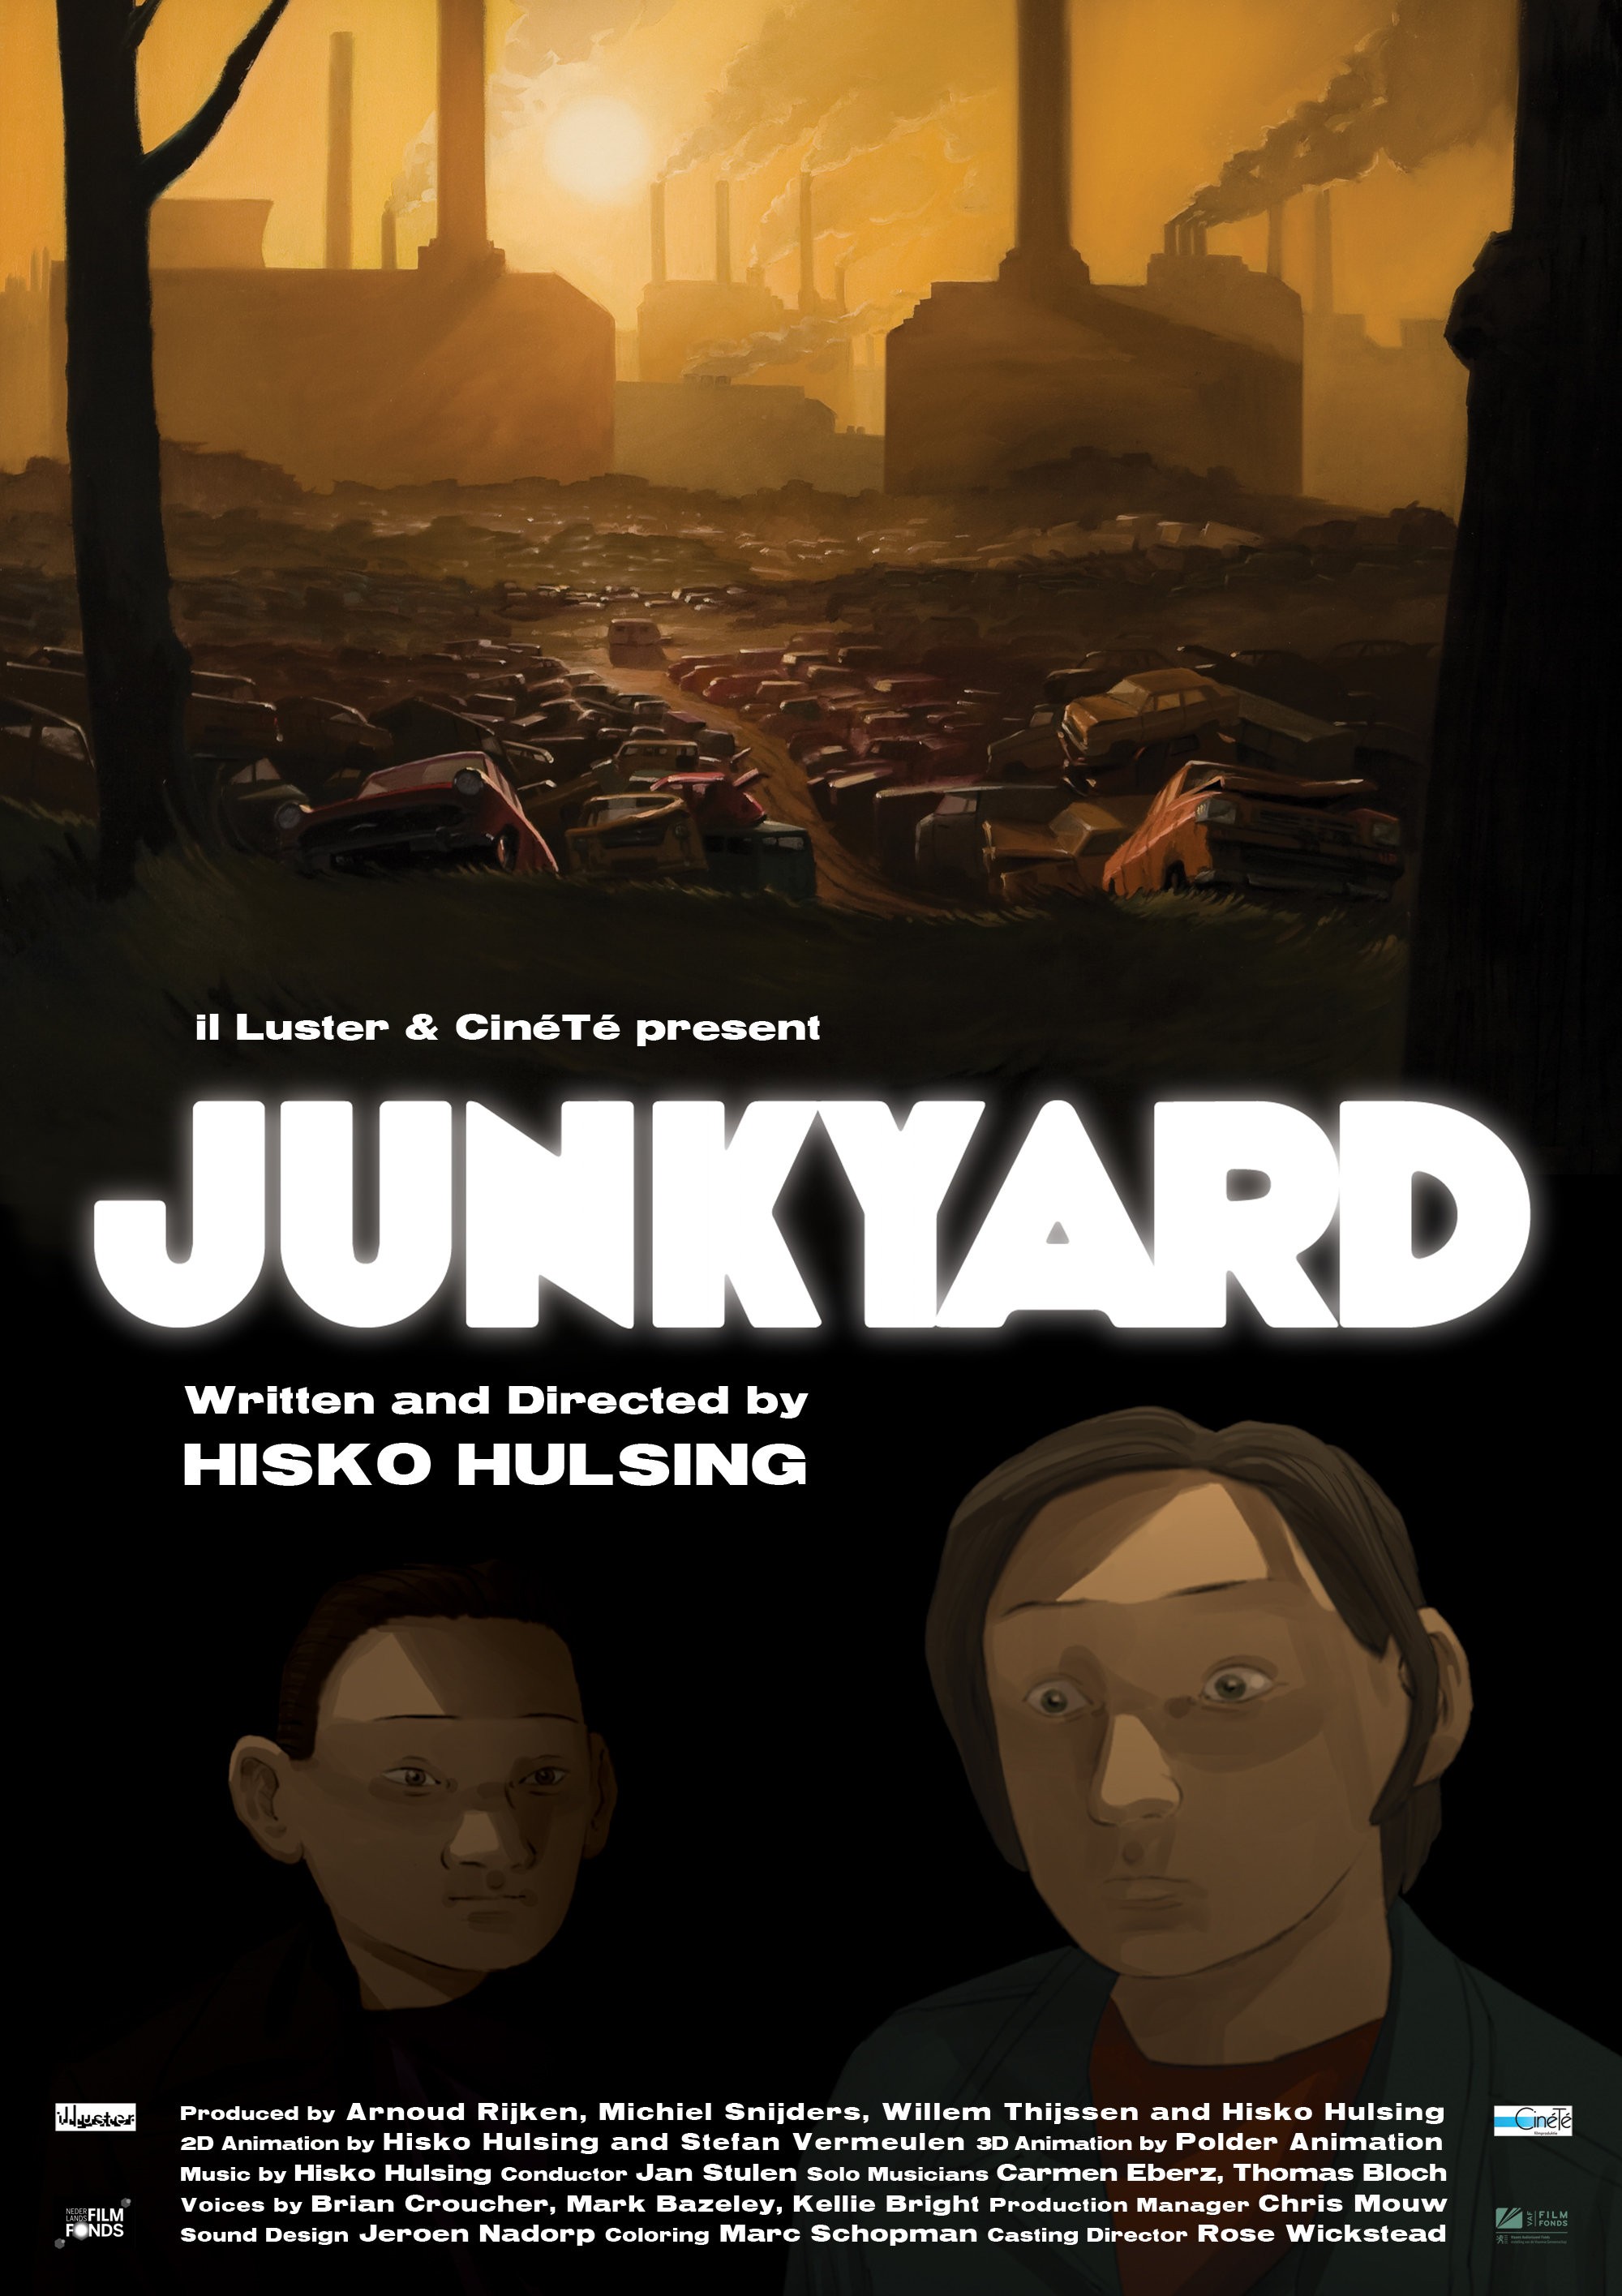 Mega Sized Movie Poster Image for Junkyard